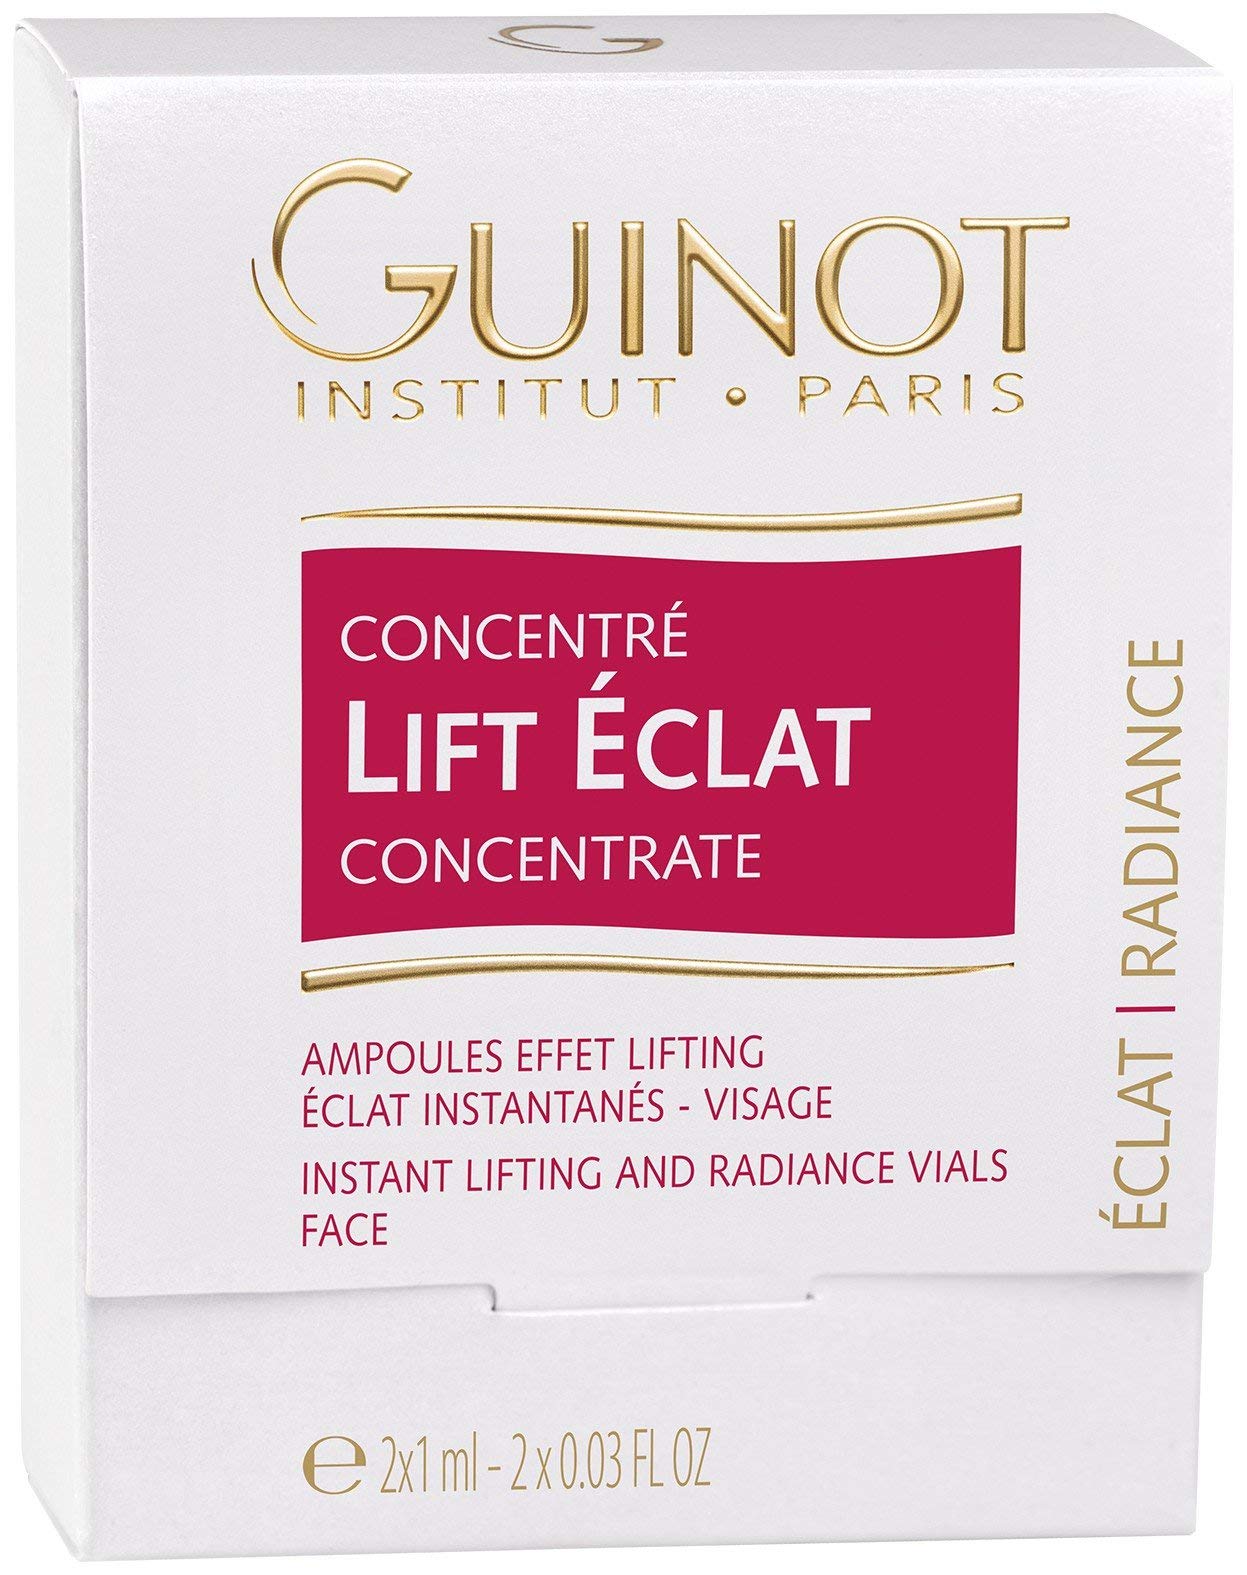 Guinot Concentre Lift Eclat, 2 Count